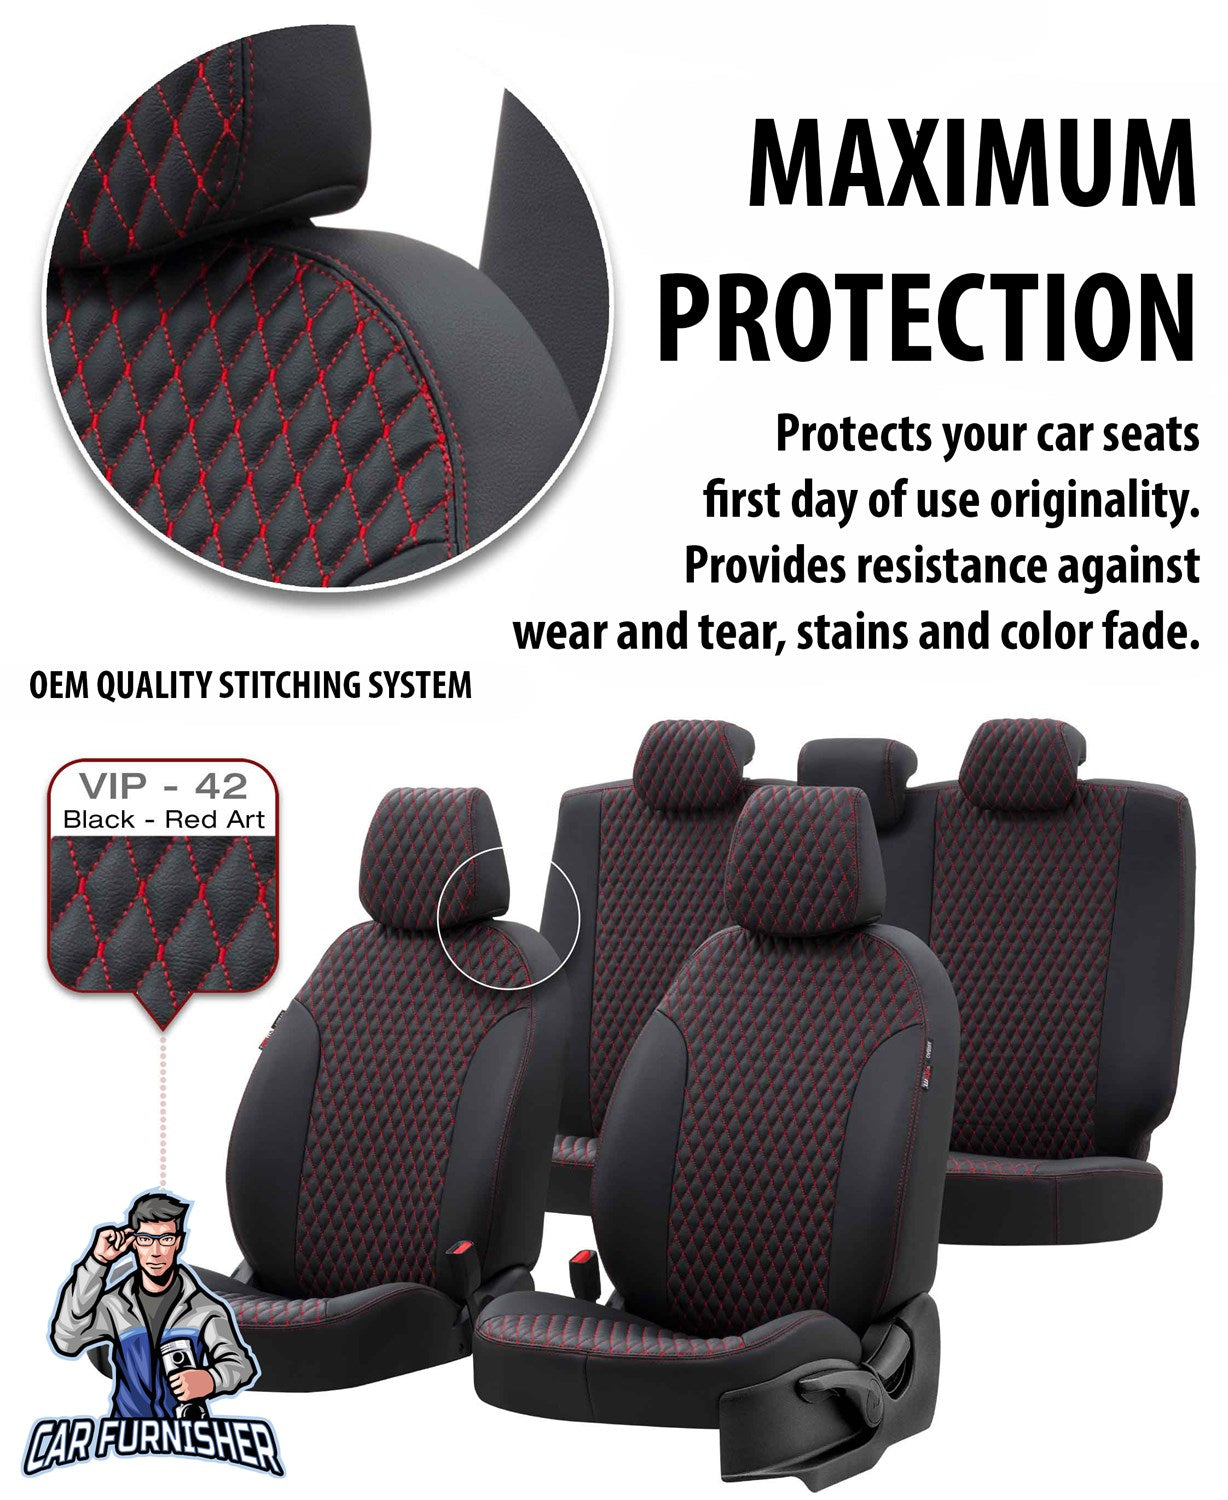 Dacia Sandero Seat Covers Amsterdam Leather Design Smoked Black Leather